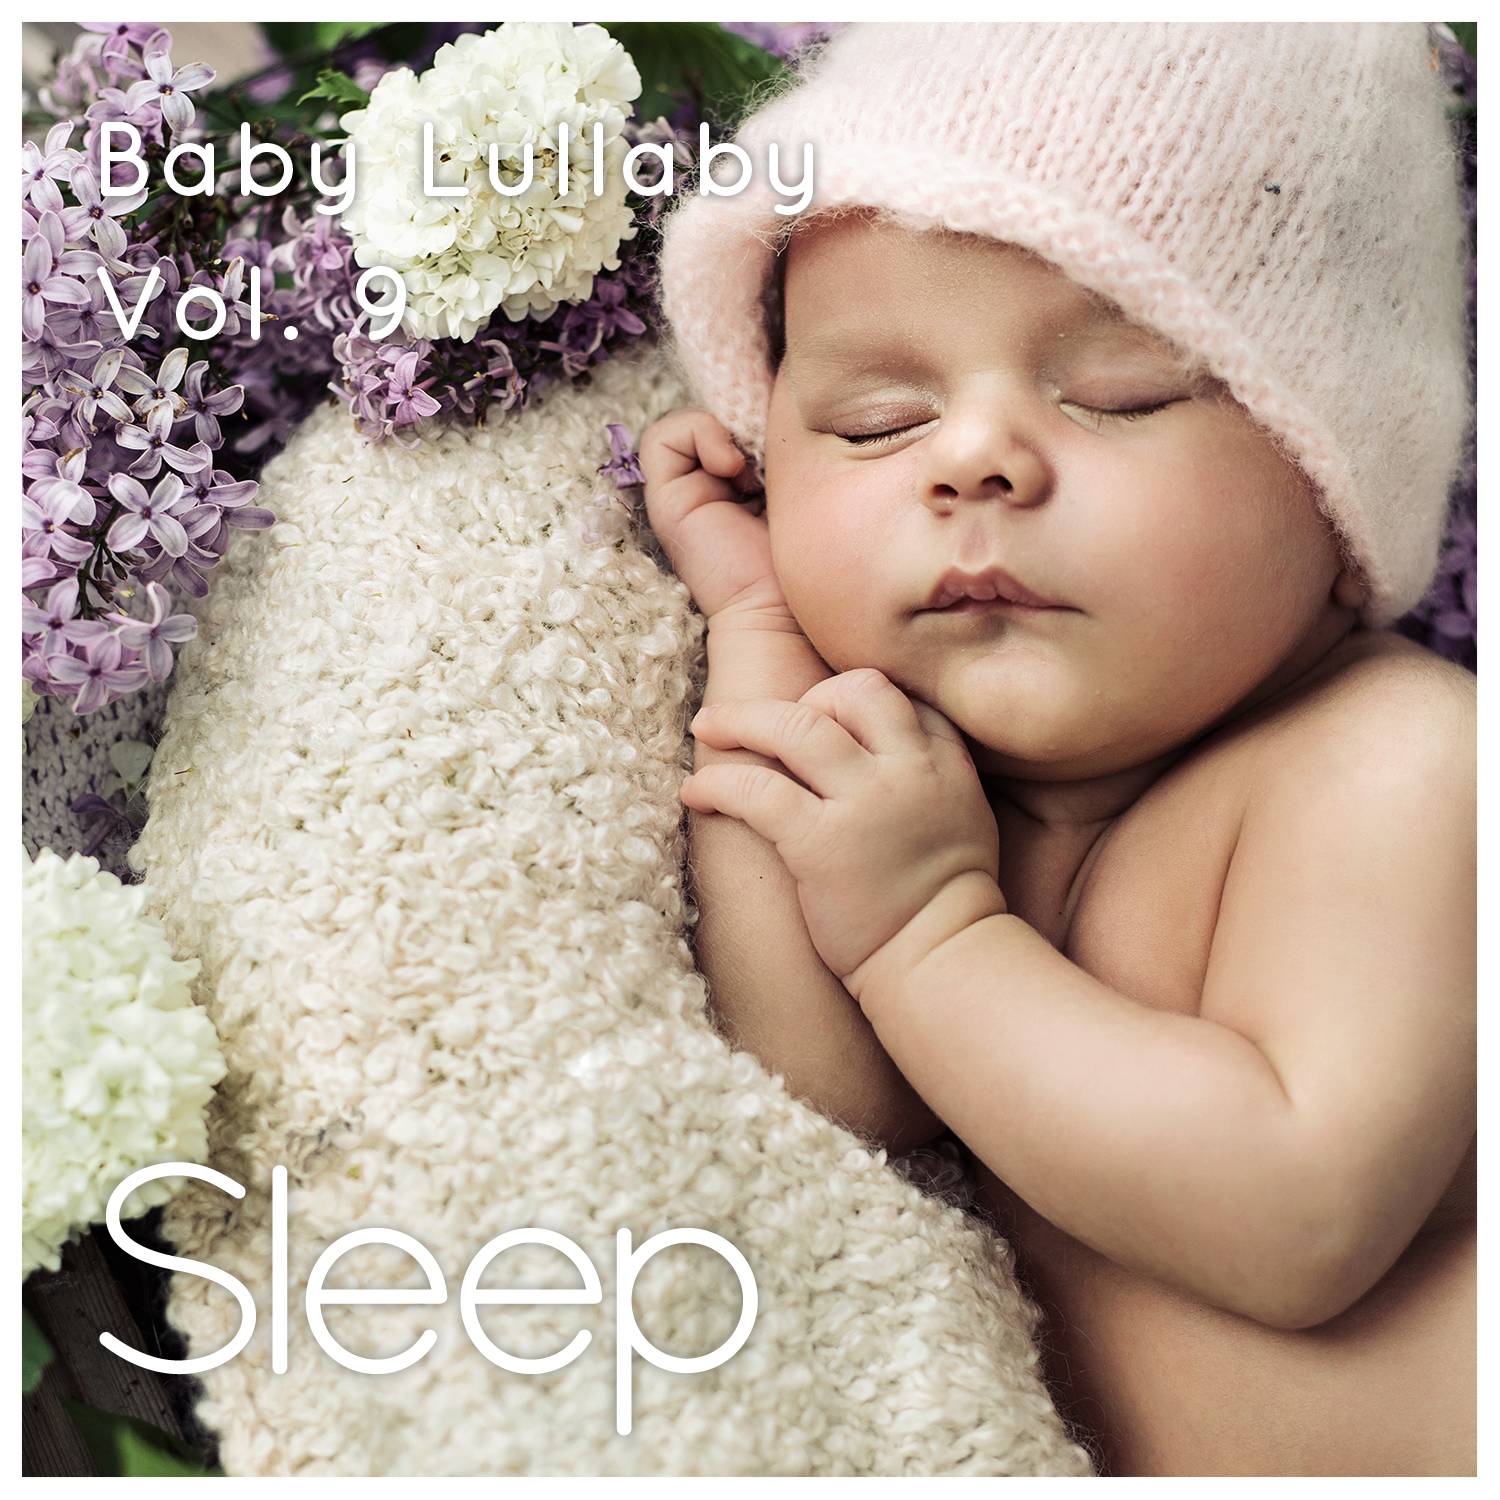 Baby Sleep - The Tumble Dryer Lullaby, Vol. 9